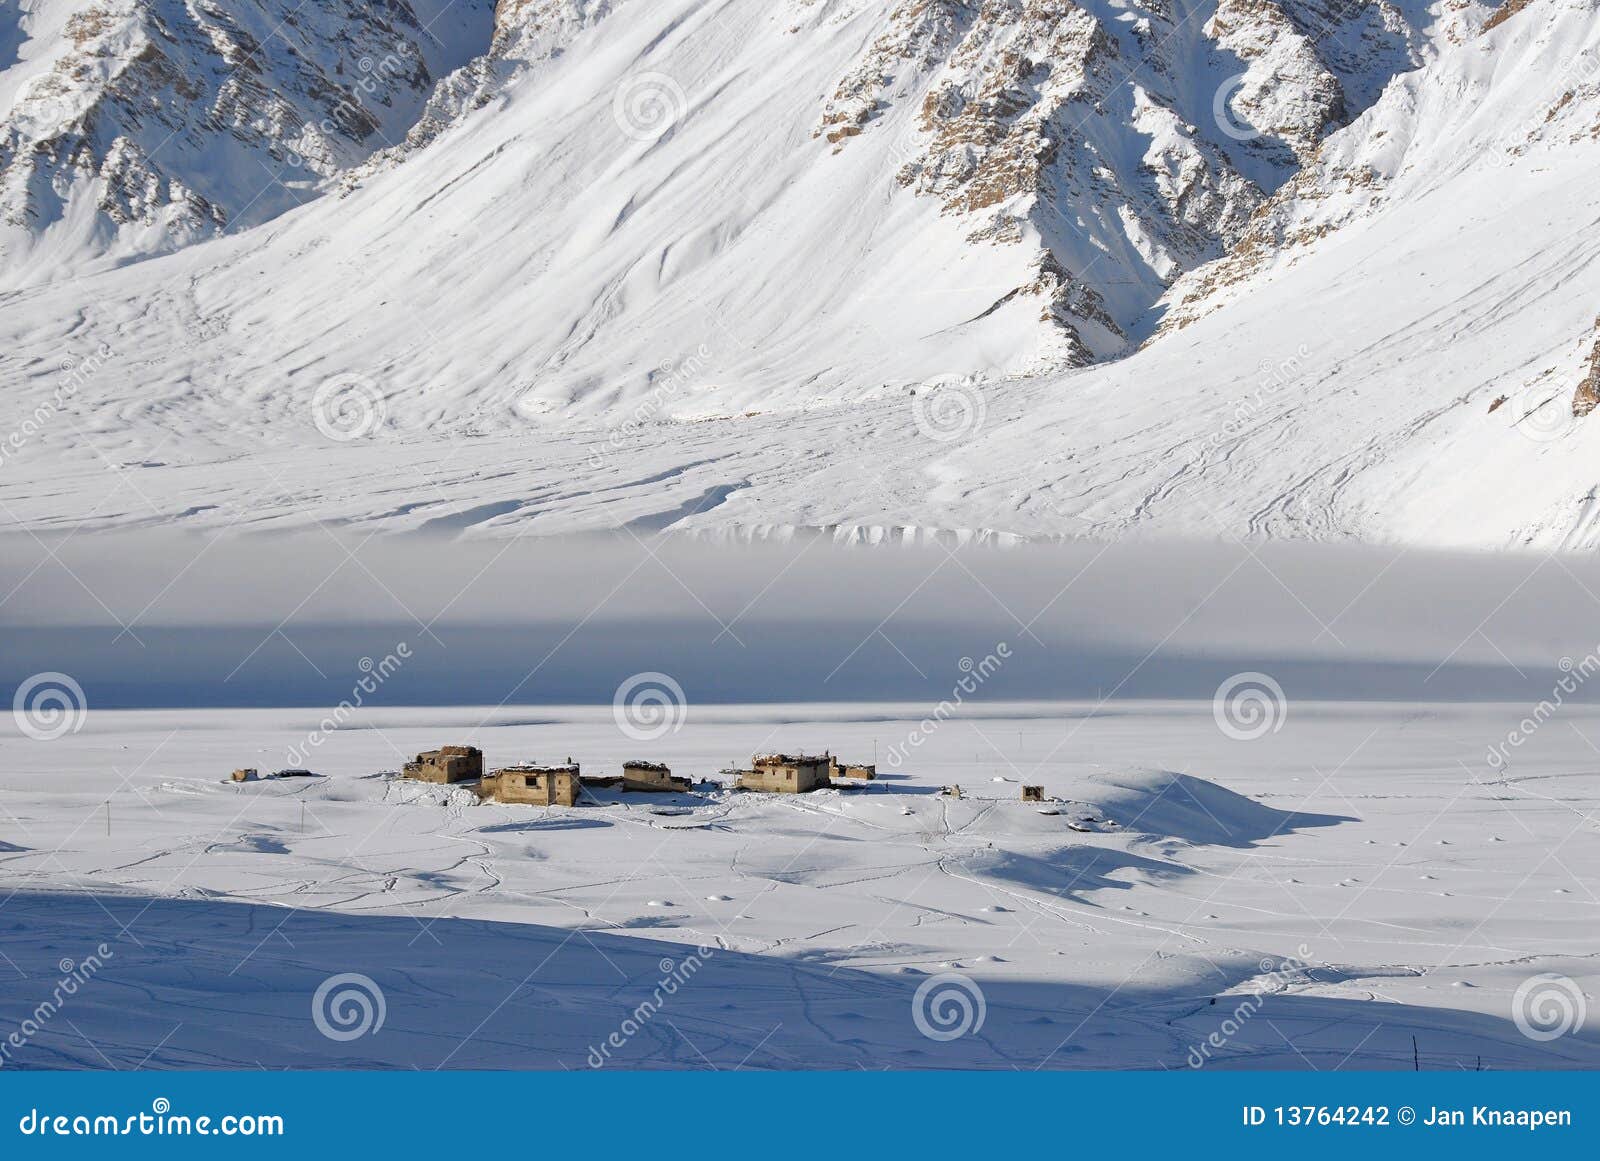 winter in the zanskar valley - 2